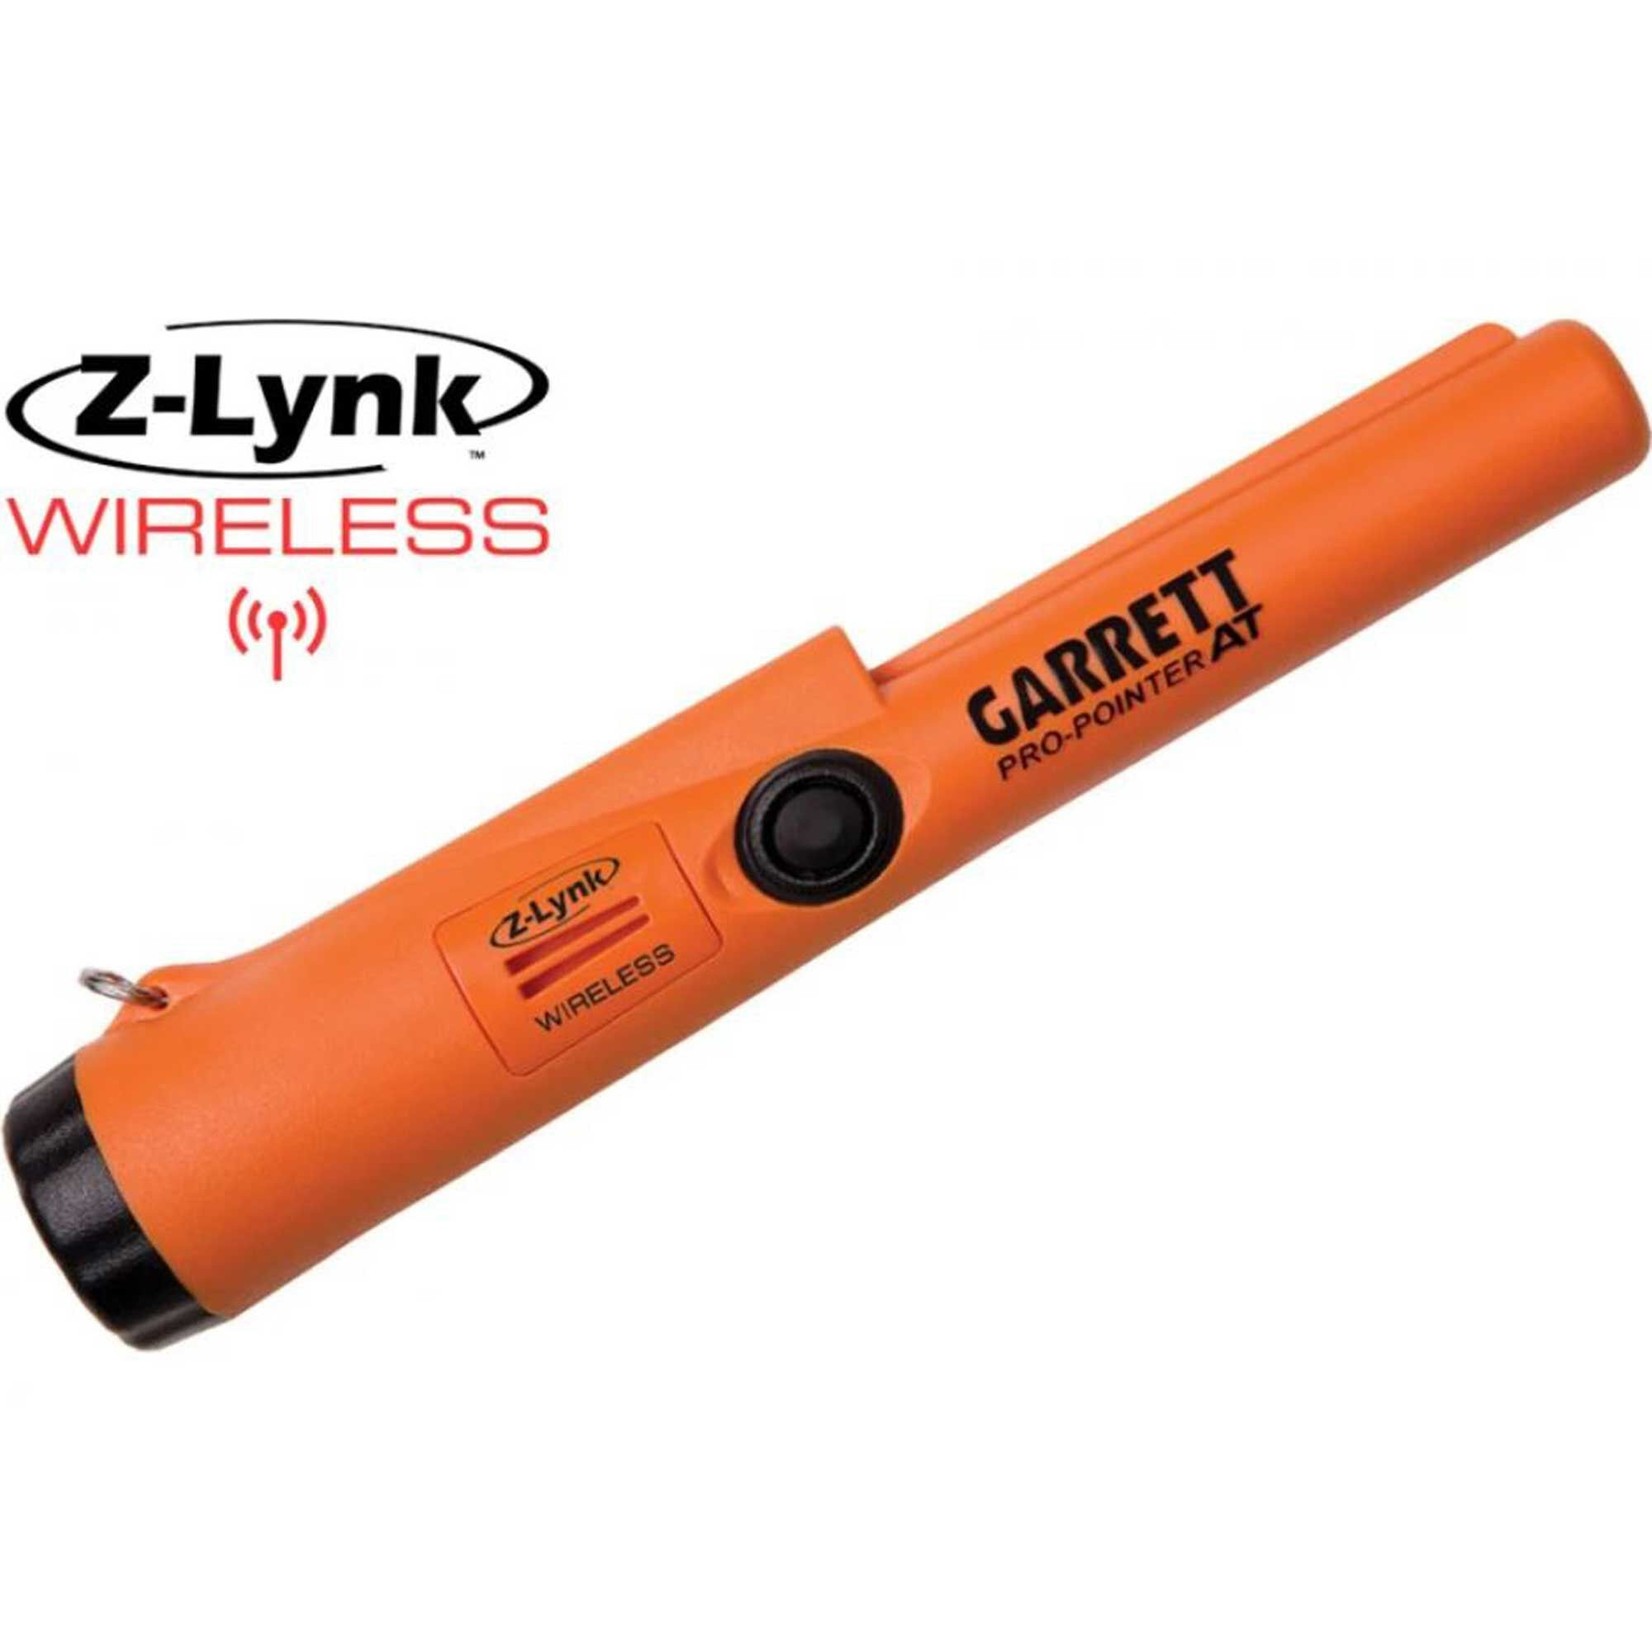 Garrett Metal Detectors Pro-Pointer AT Z-Lynk